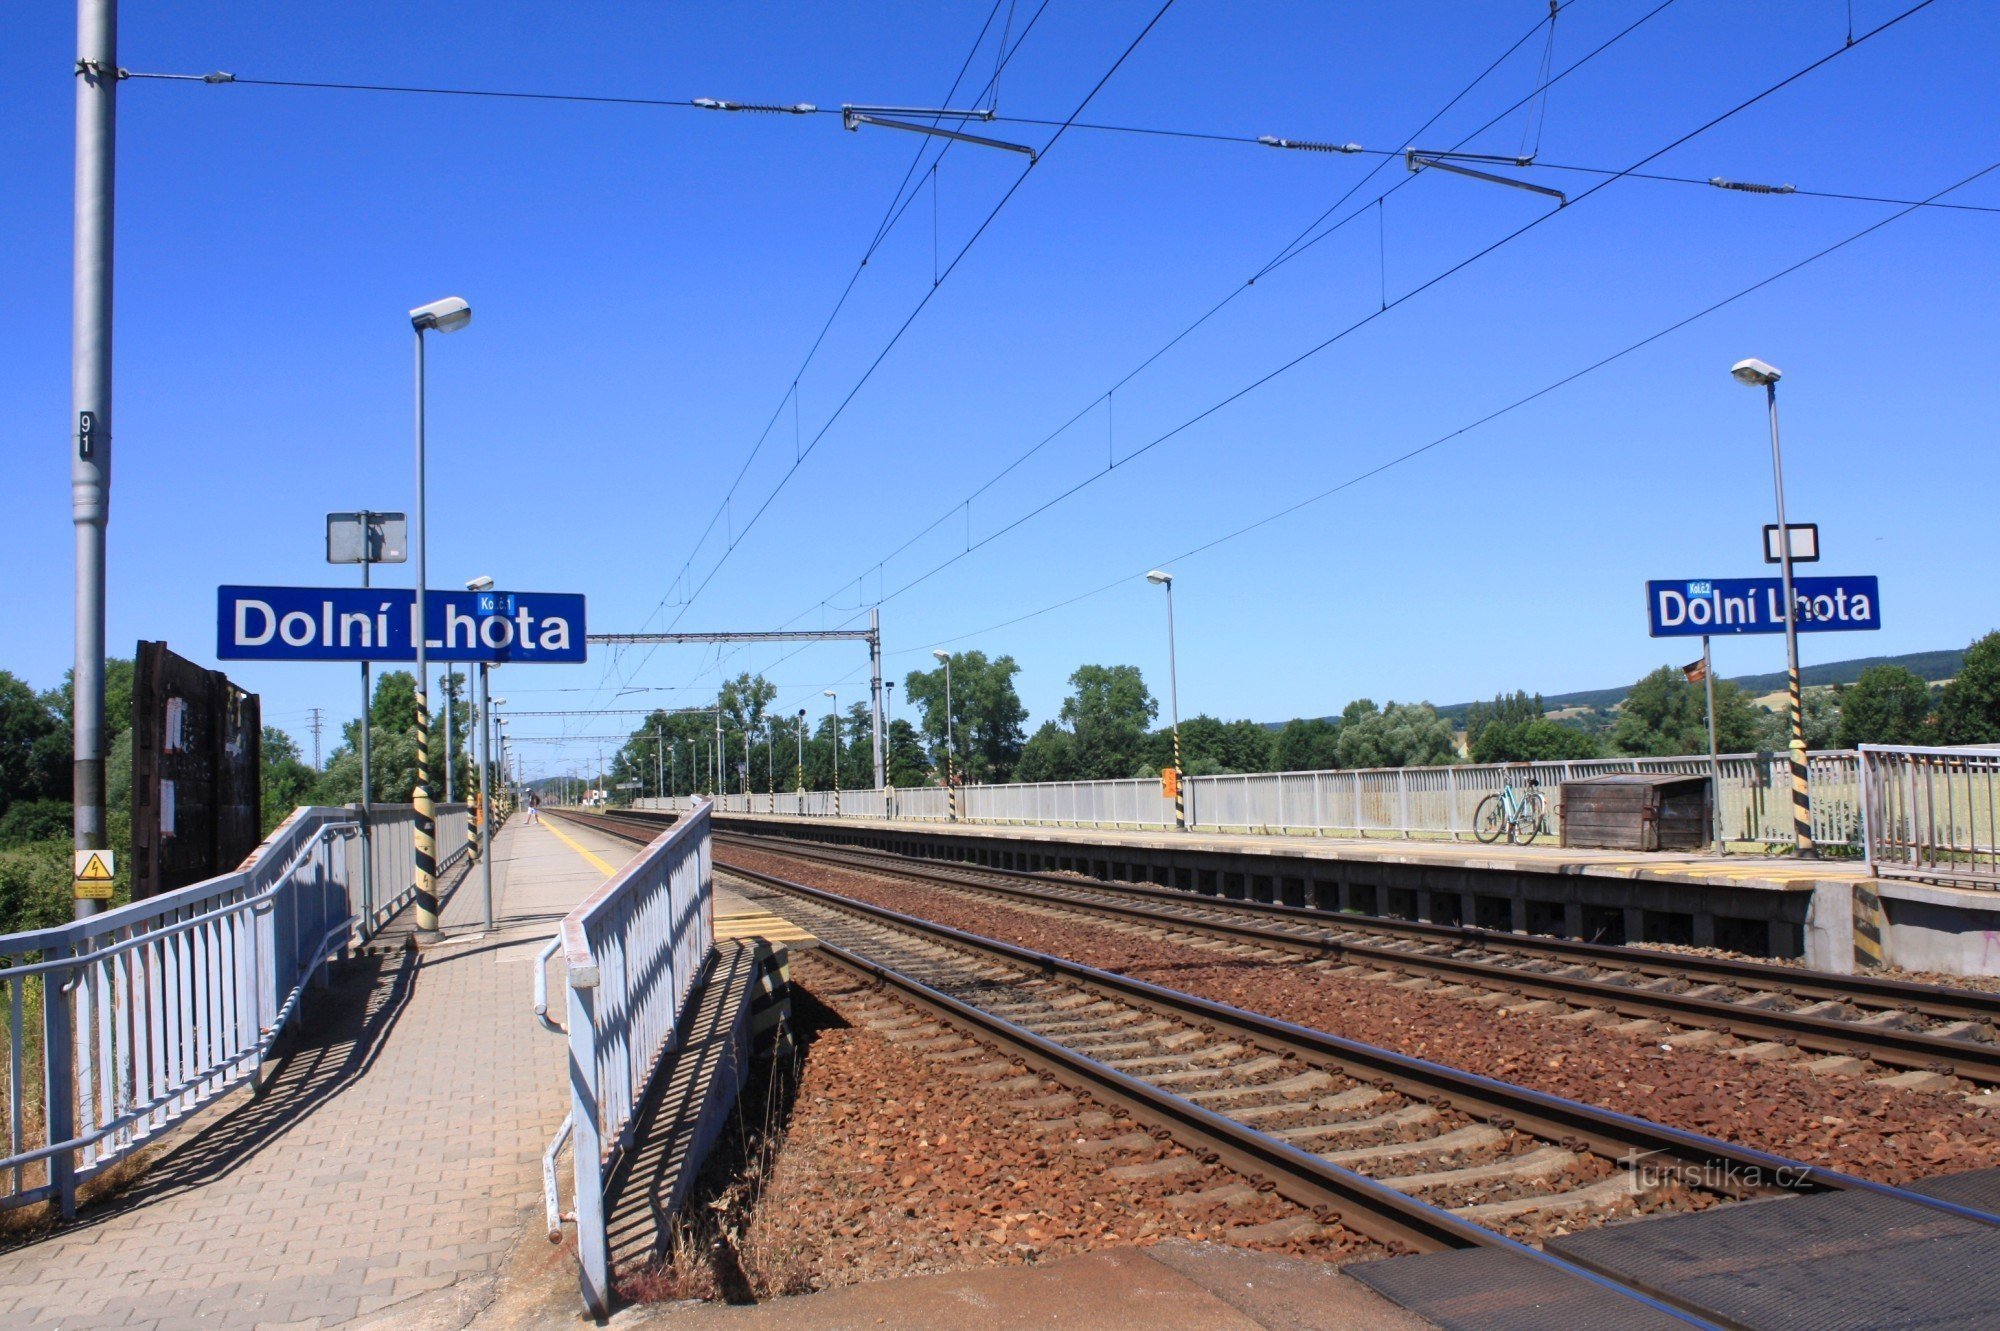 Dolní Lhota - railway station